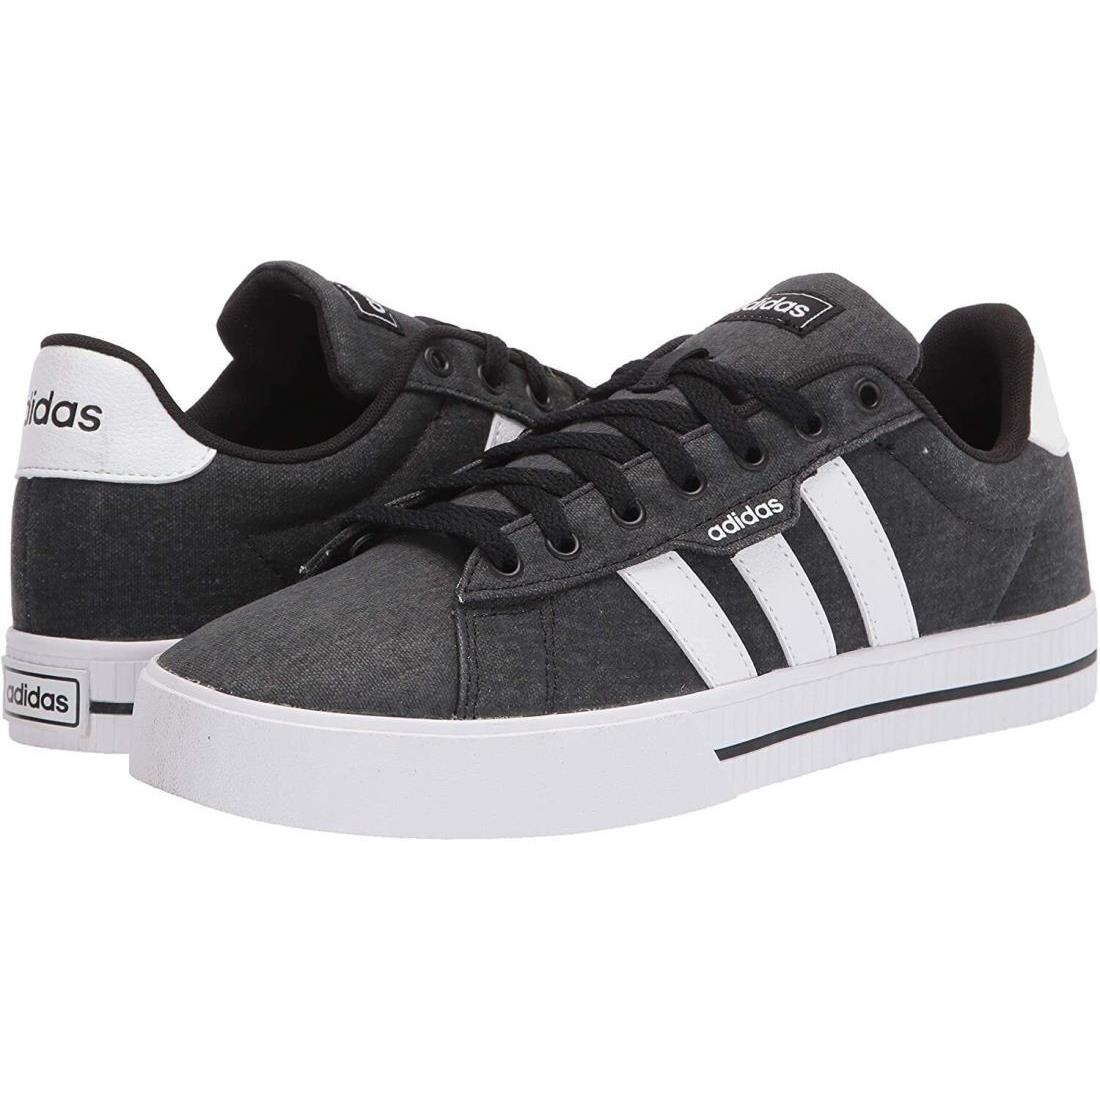 Man Adidas Daily 3.0 Skate Shoe FW7033 Color Black/white/black